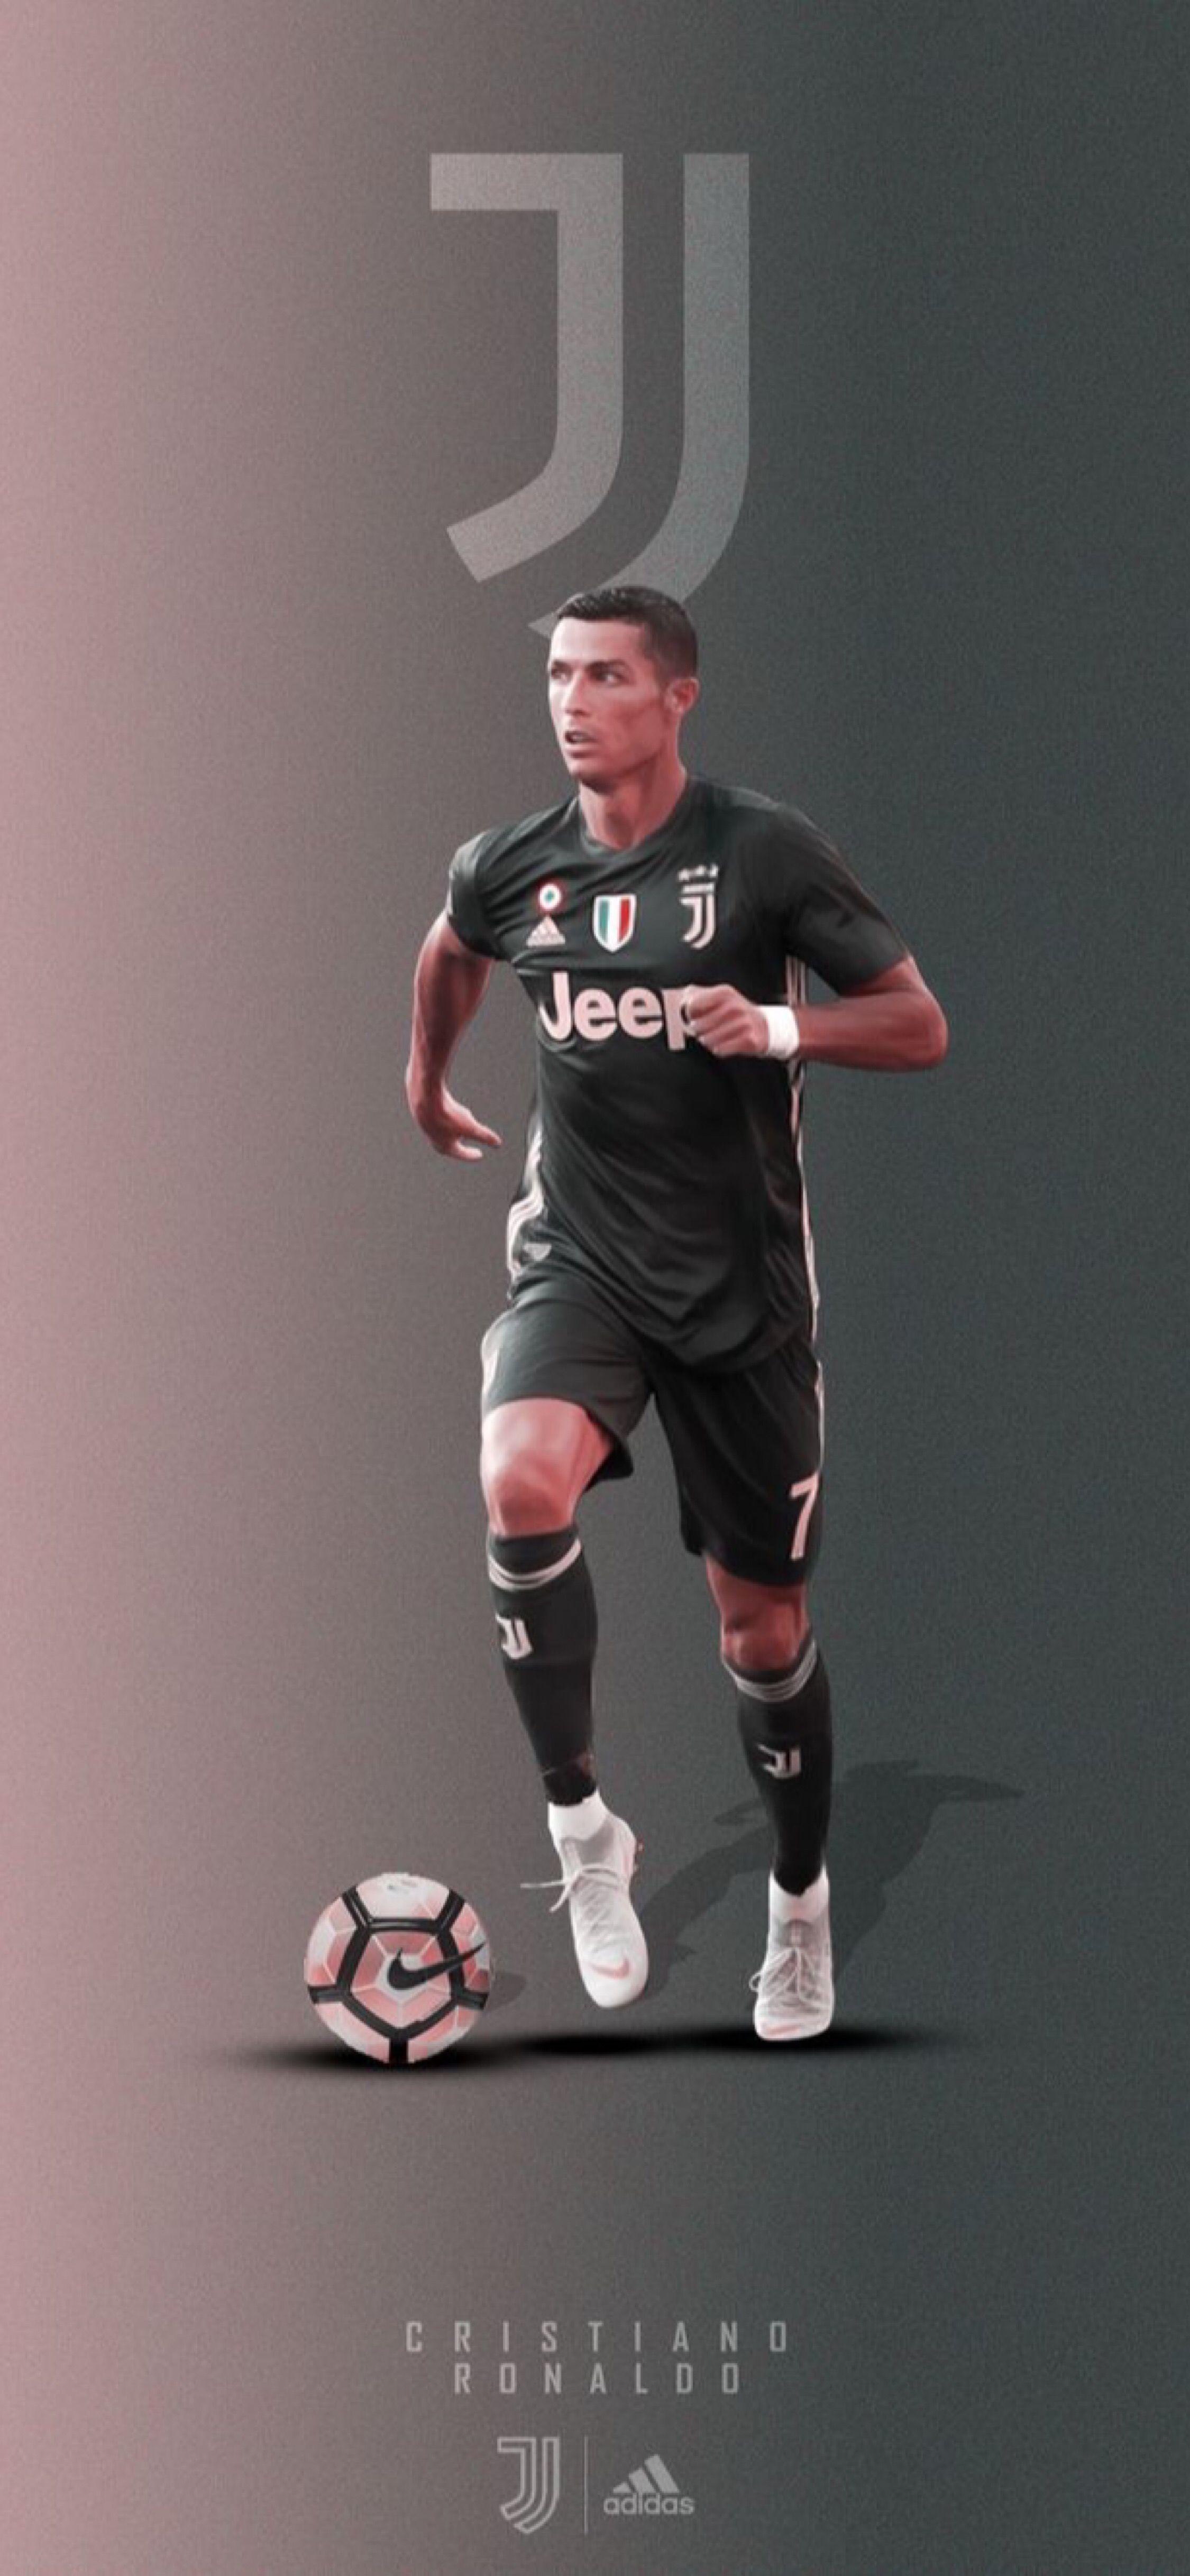 Tarick Prendergast on iPhone X Cristiano Ronaldo Wallpapers